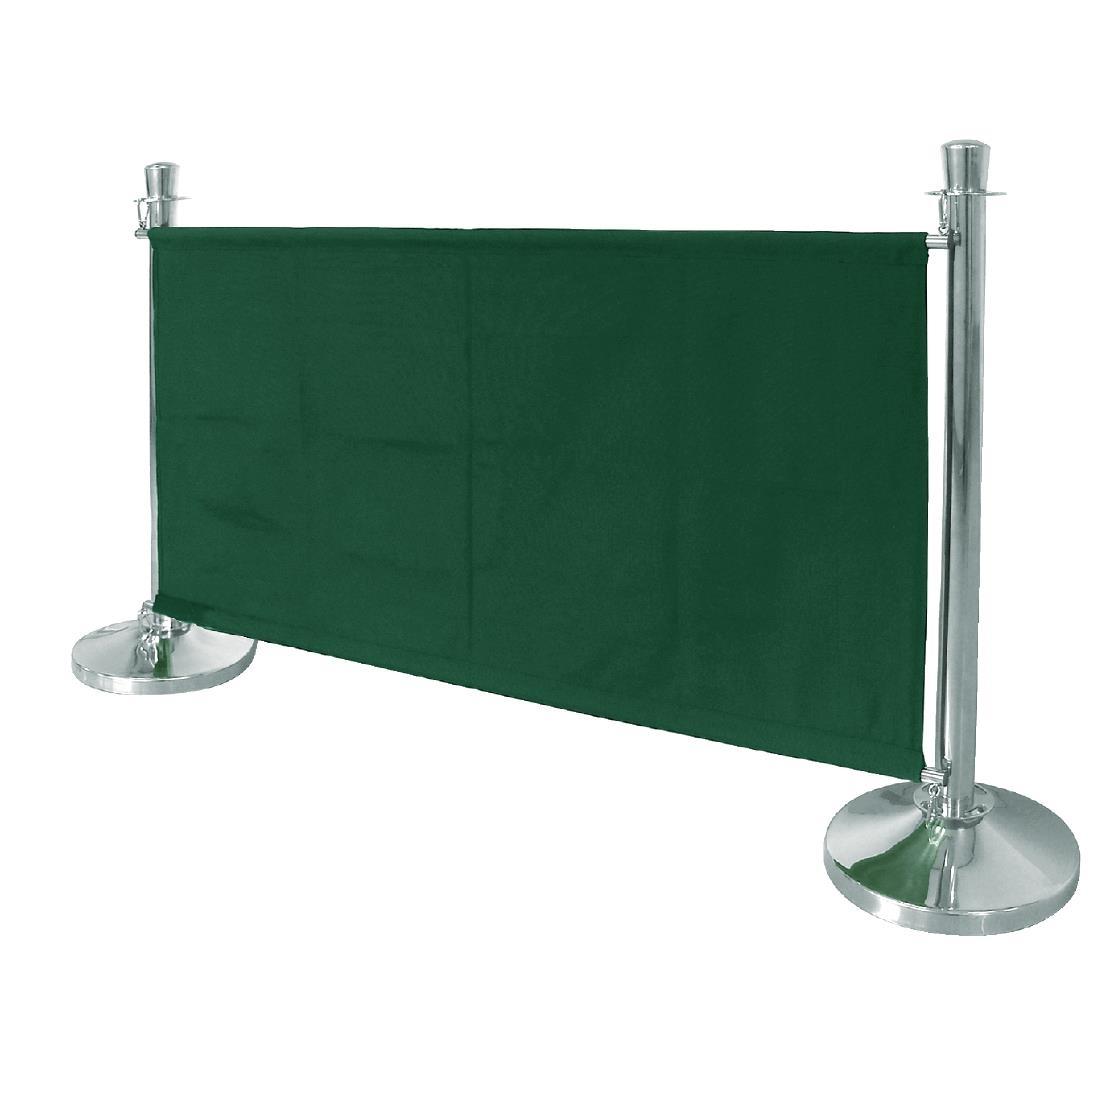 Bolero Green Canvas Barrier - CG222  - 1